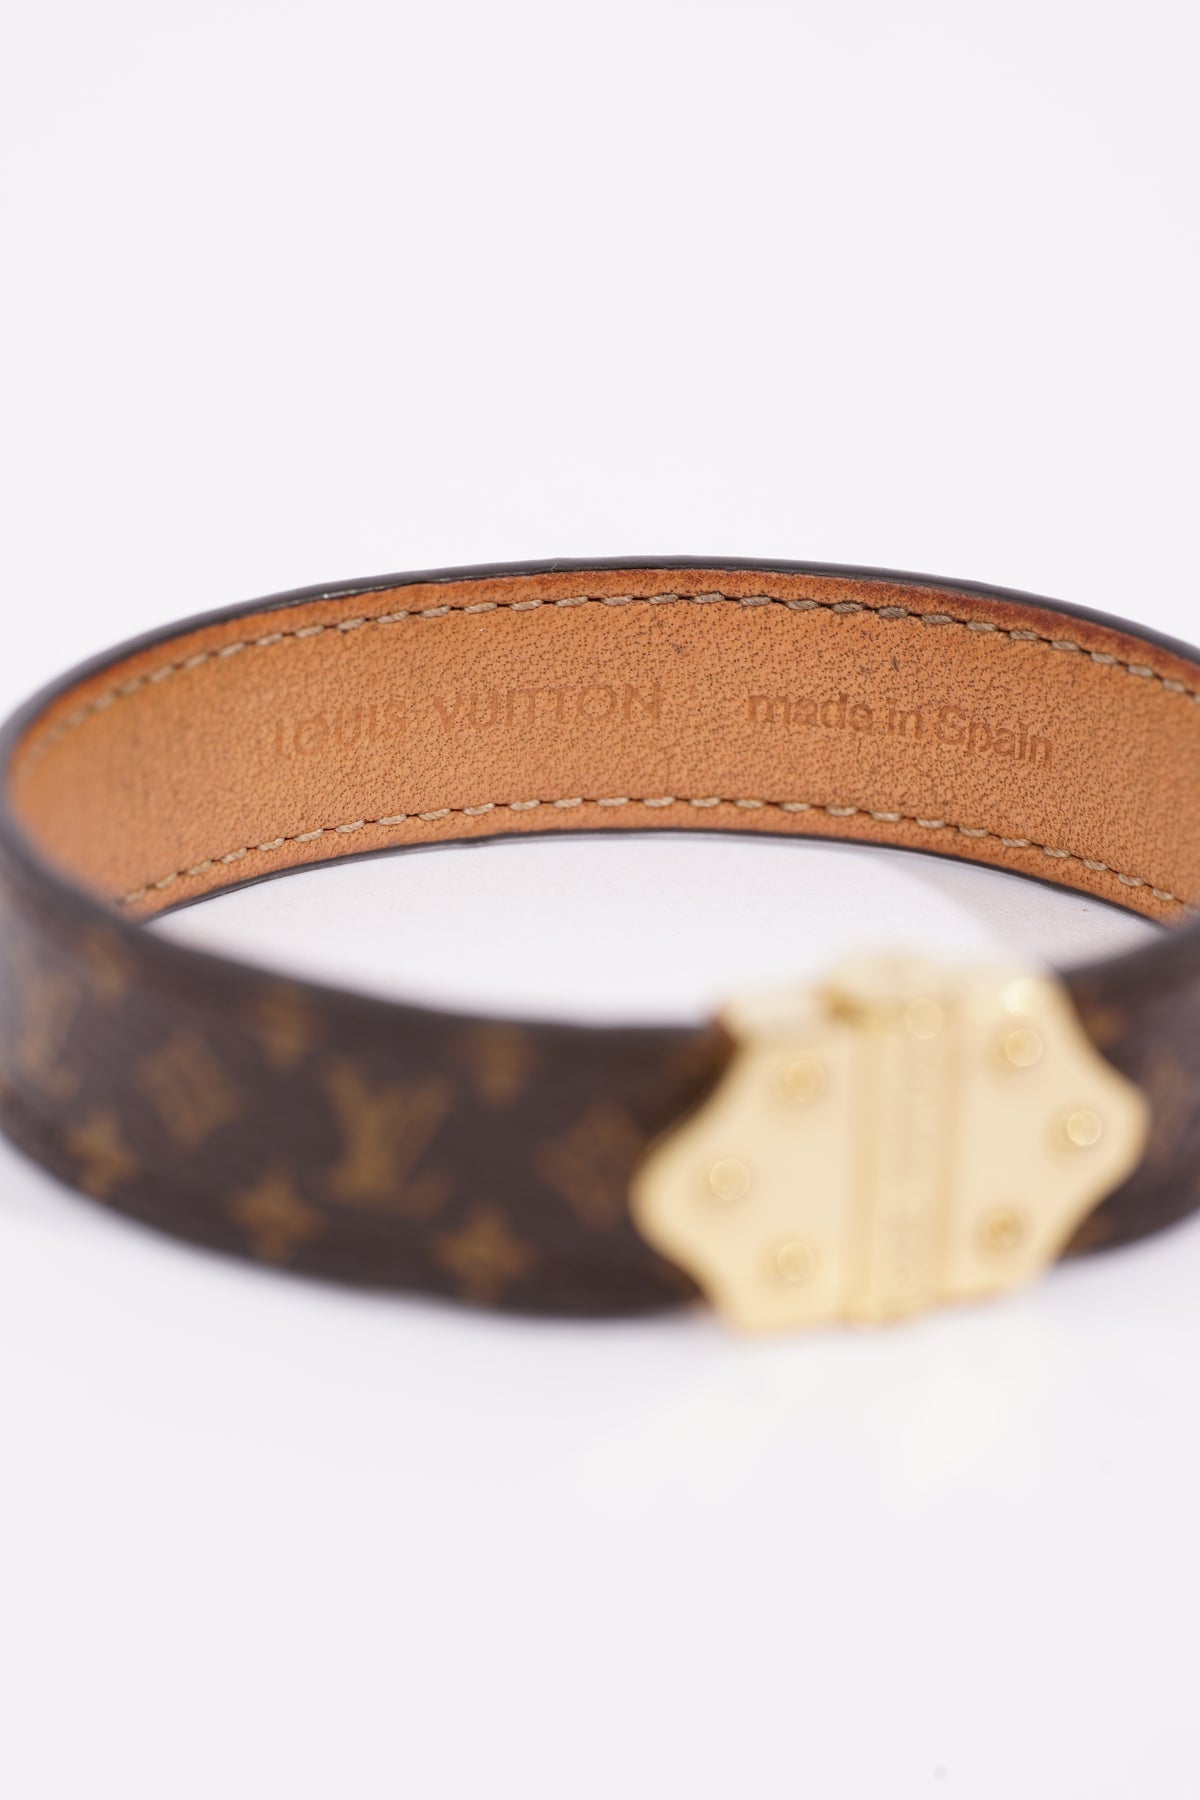 Louis Vuitton Nano Monogram Leather Bracelet